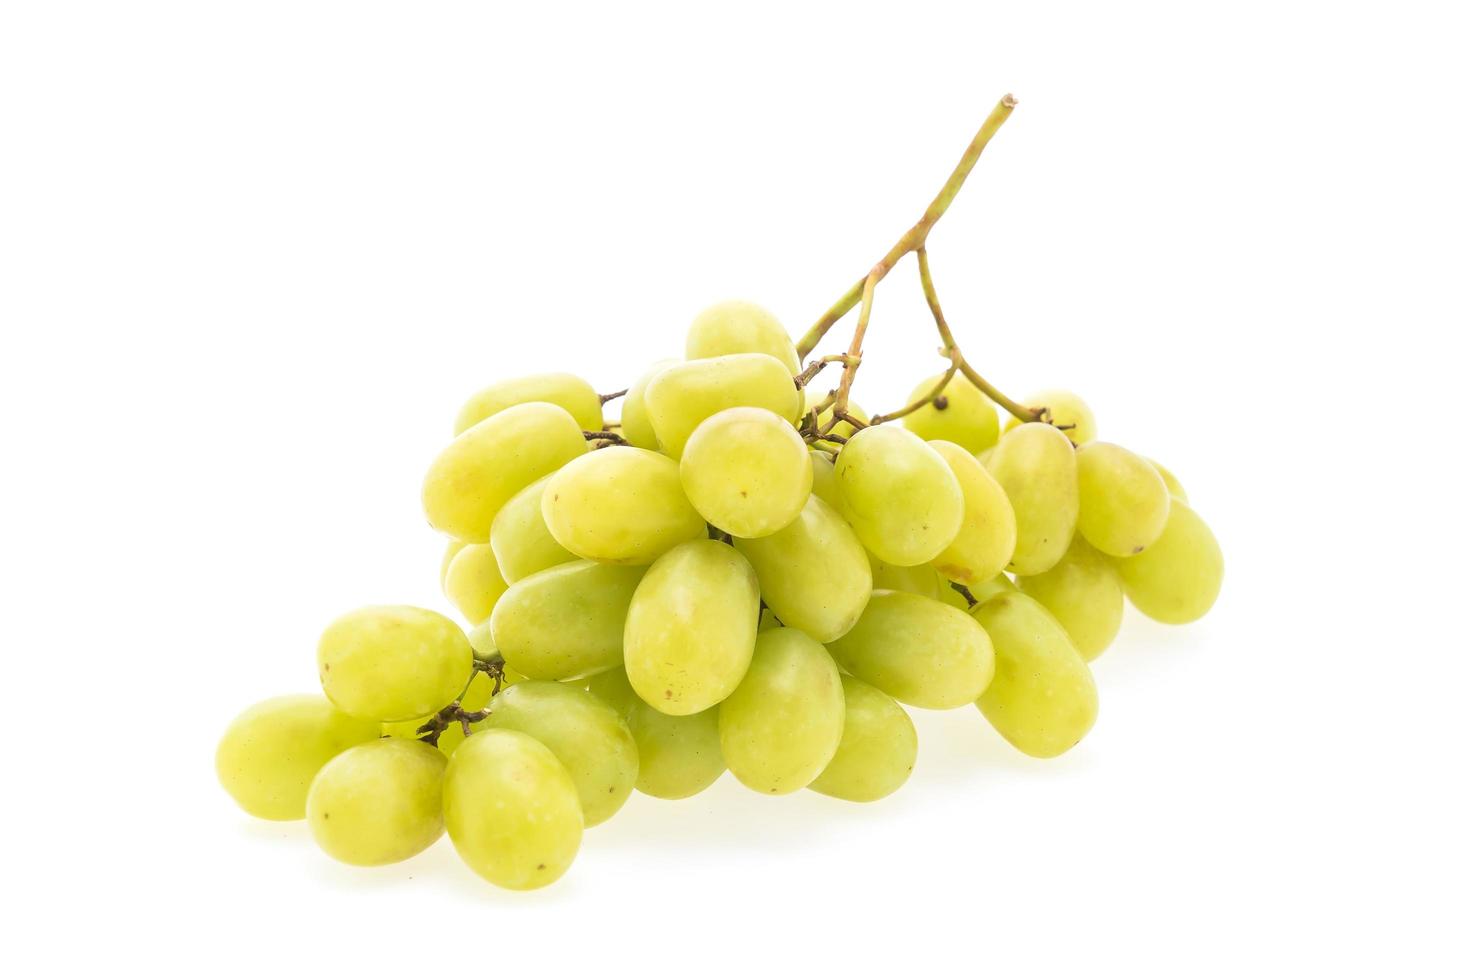 Fruta de uvas aislado sobre fondo blanco. foto